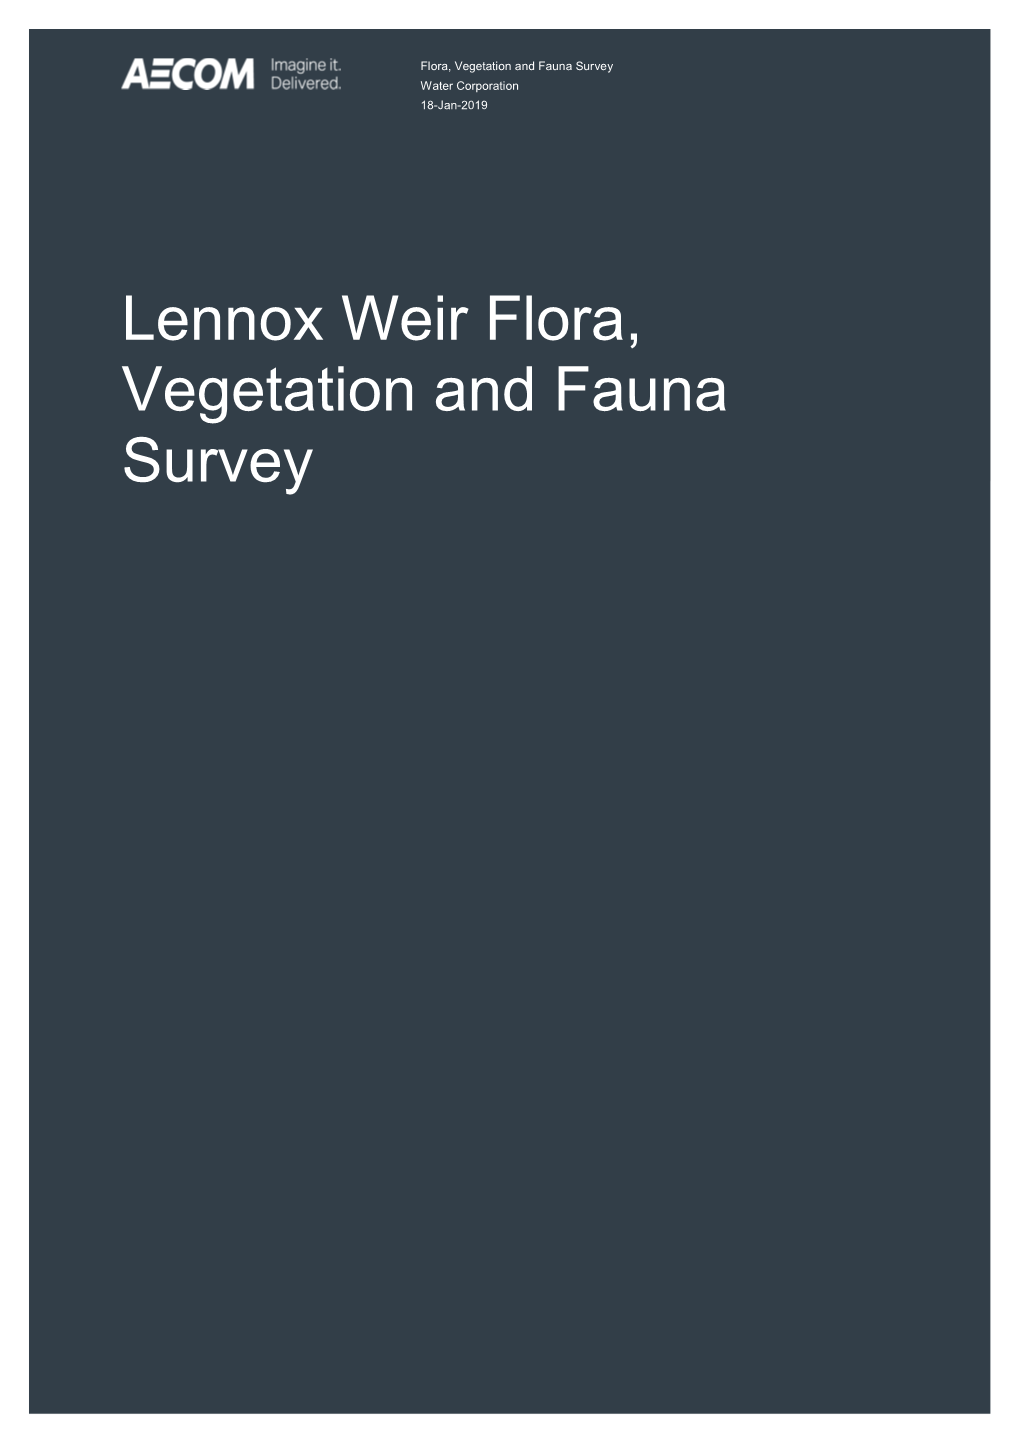 Lennox Weir Flora, Vegetation and Fauna Survey AECOM Flora, Vegetation and Fauna Survey Lennox Weir Flora, Vegetation and Fauna Survey